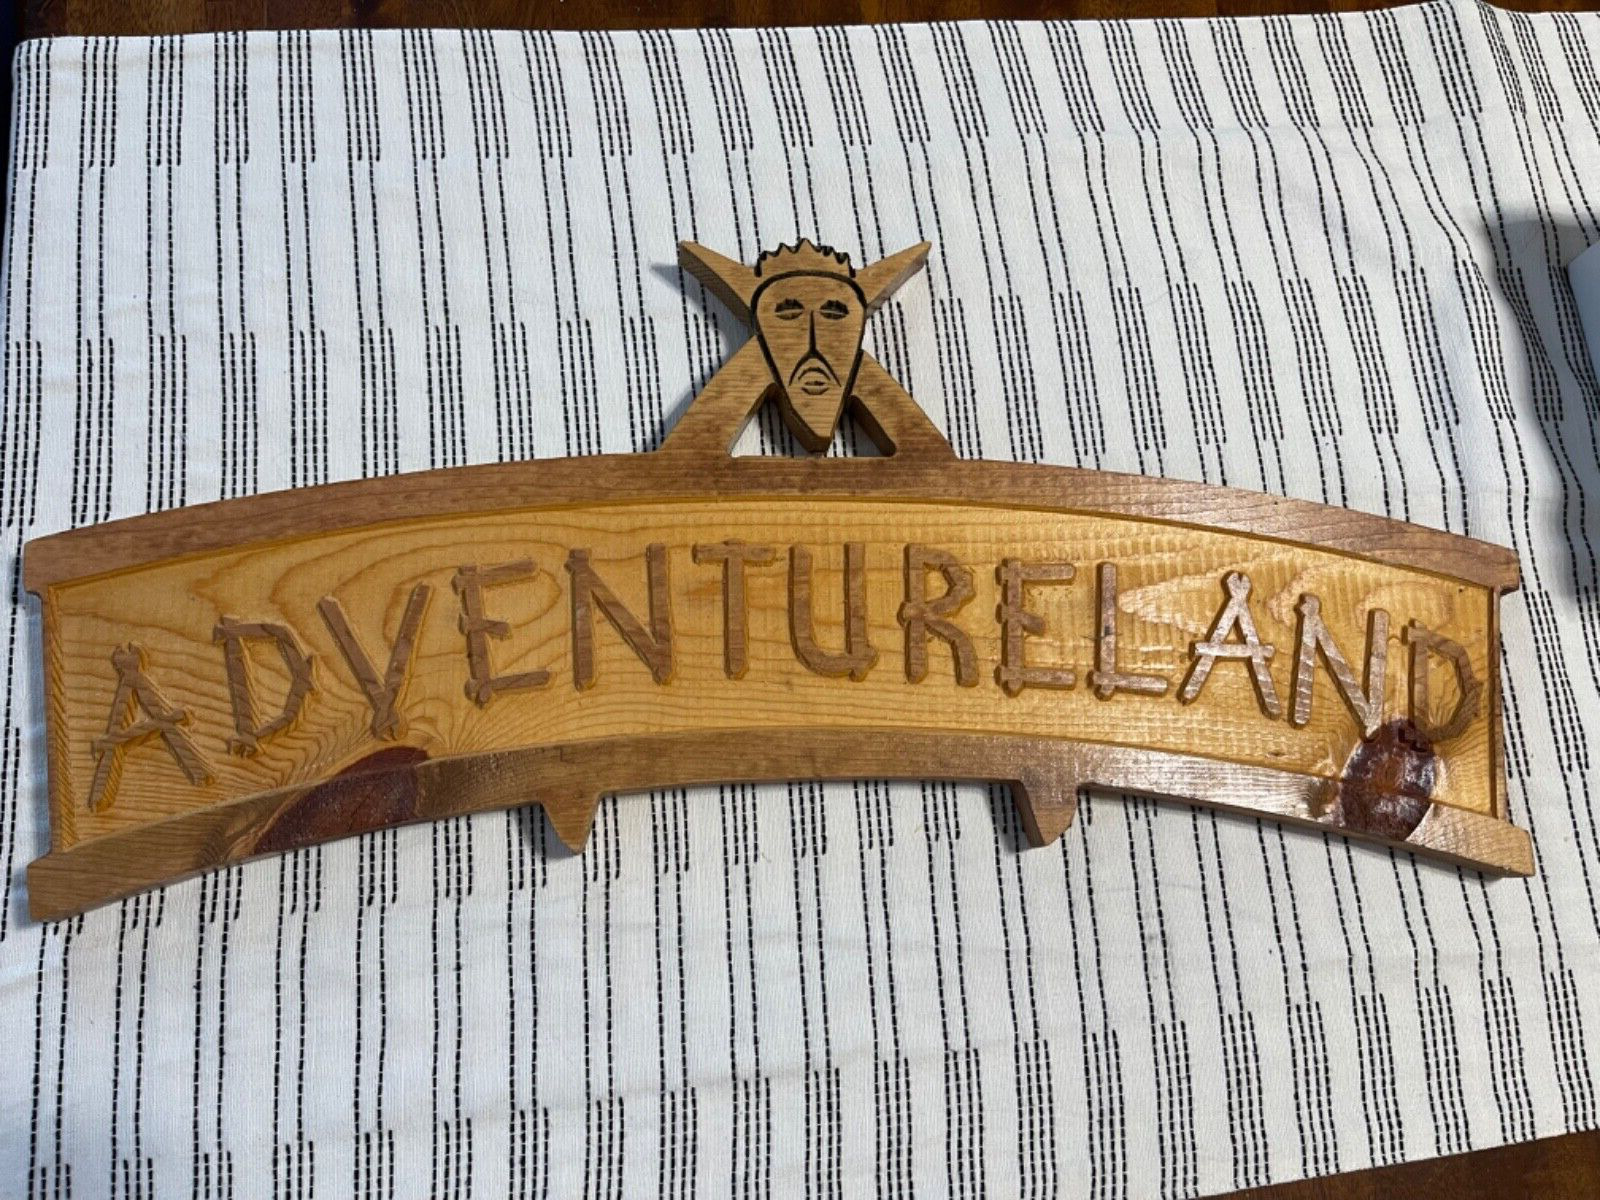 Disneyland Adventureland wood sign 11”x 24” solid wood 